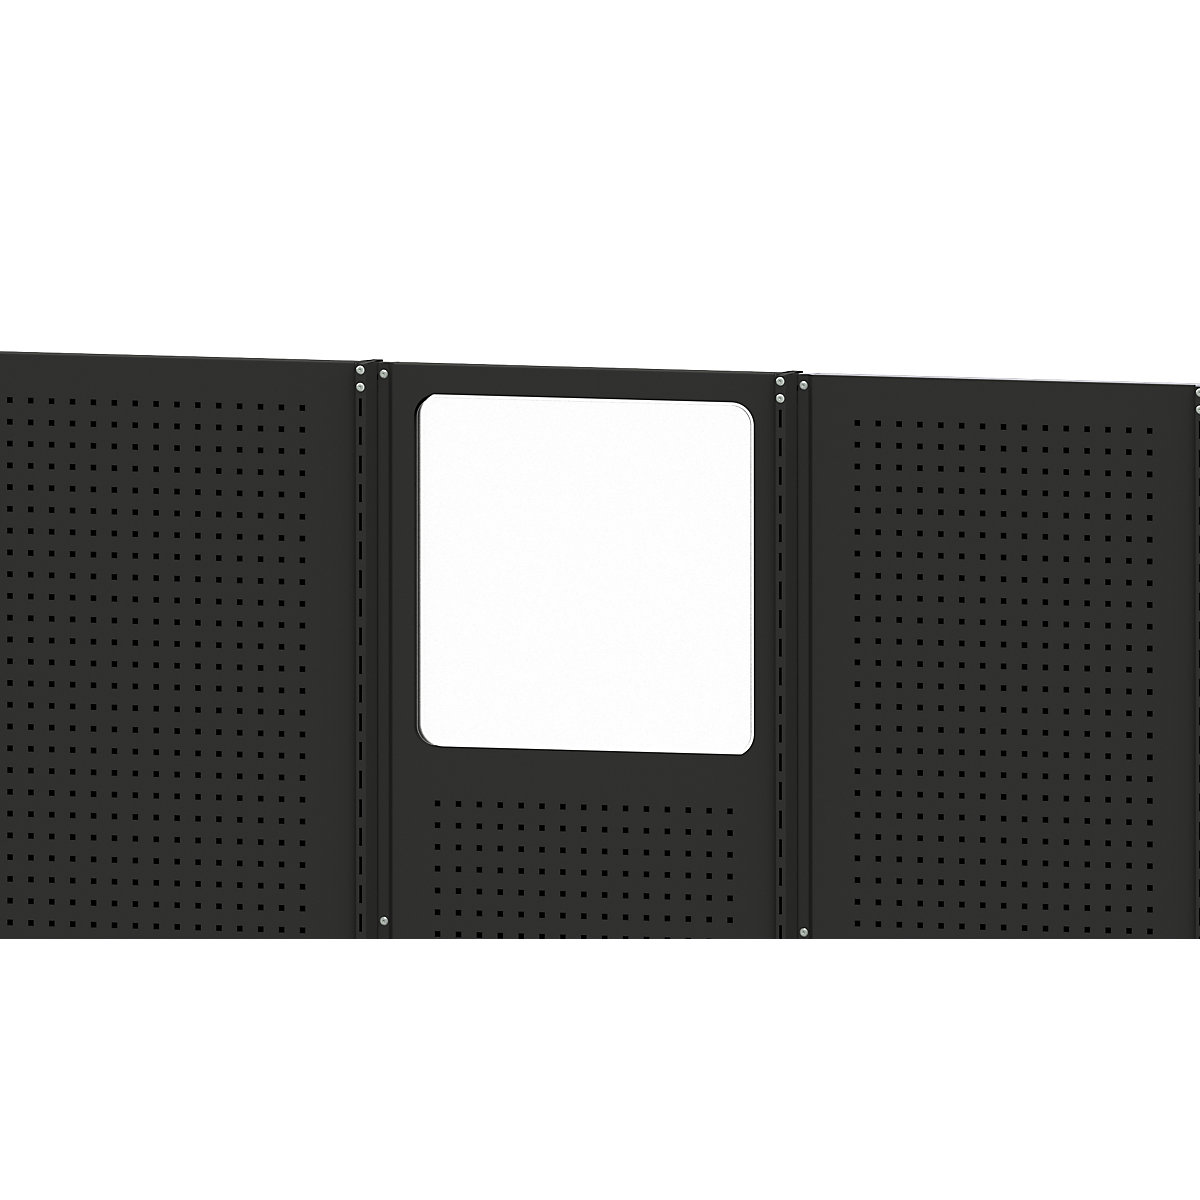 Industrial partition wall system Plexiglas window – ANKE